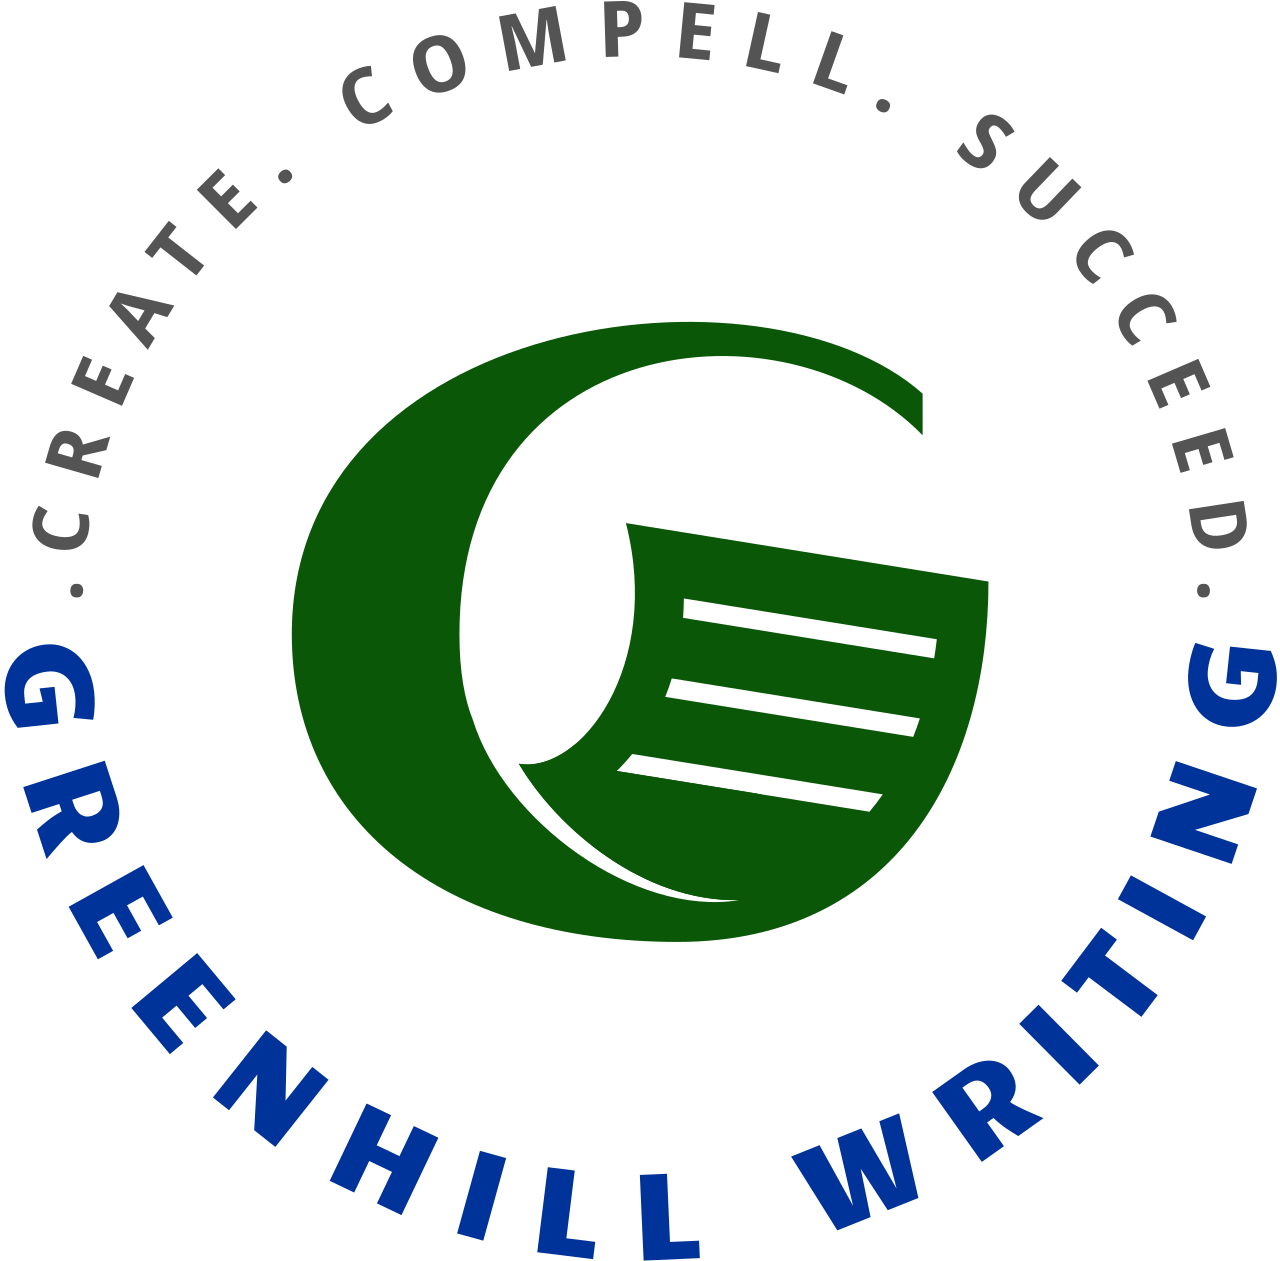 GREENHILL WRITING's web page